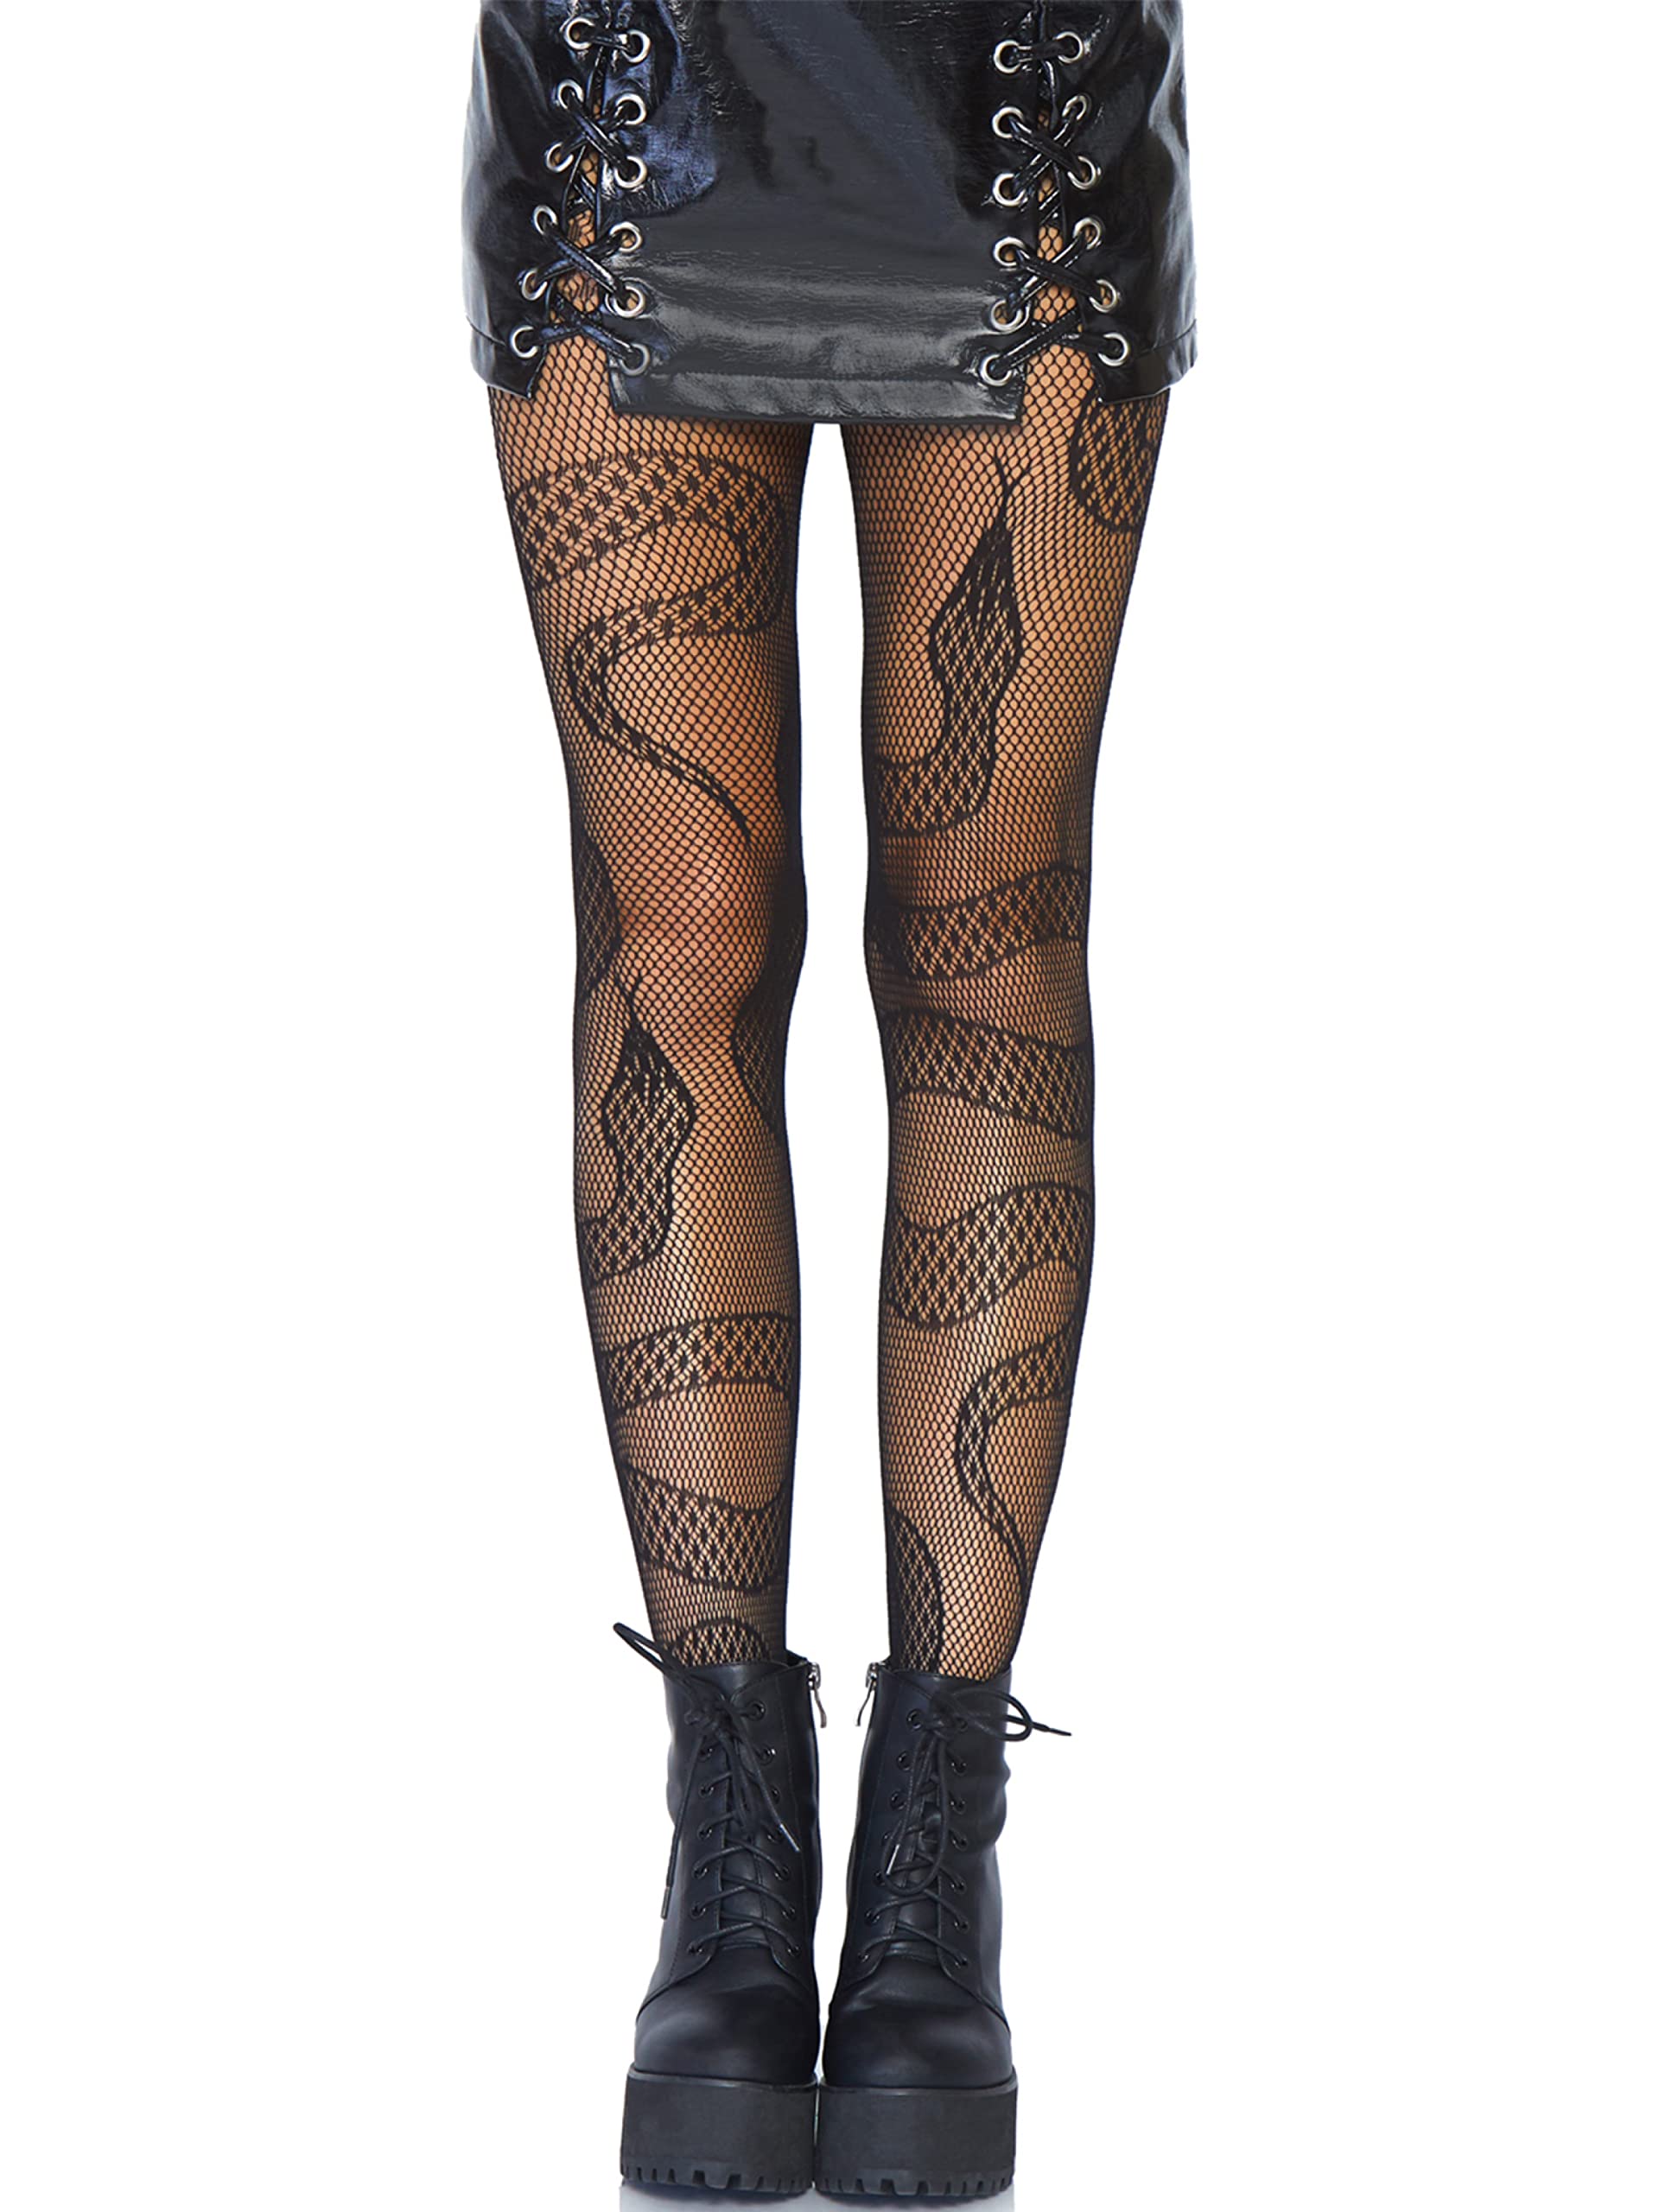 Leg Avenue Women Dark Alternative Animal Fishnet tights, Snake, 1X US